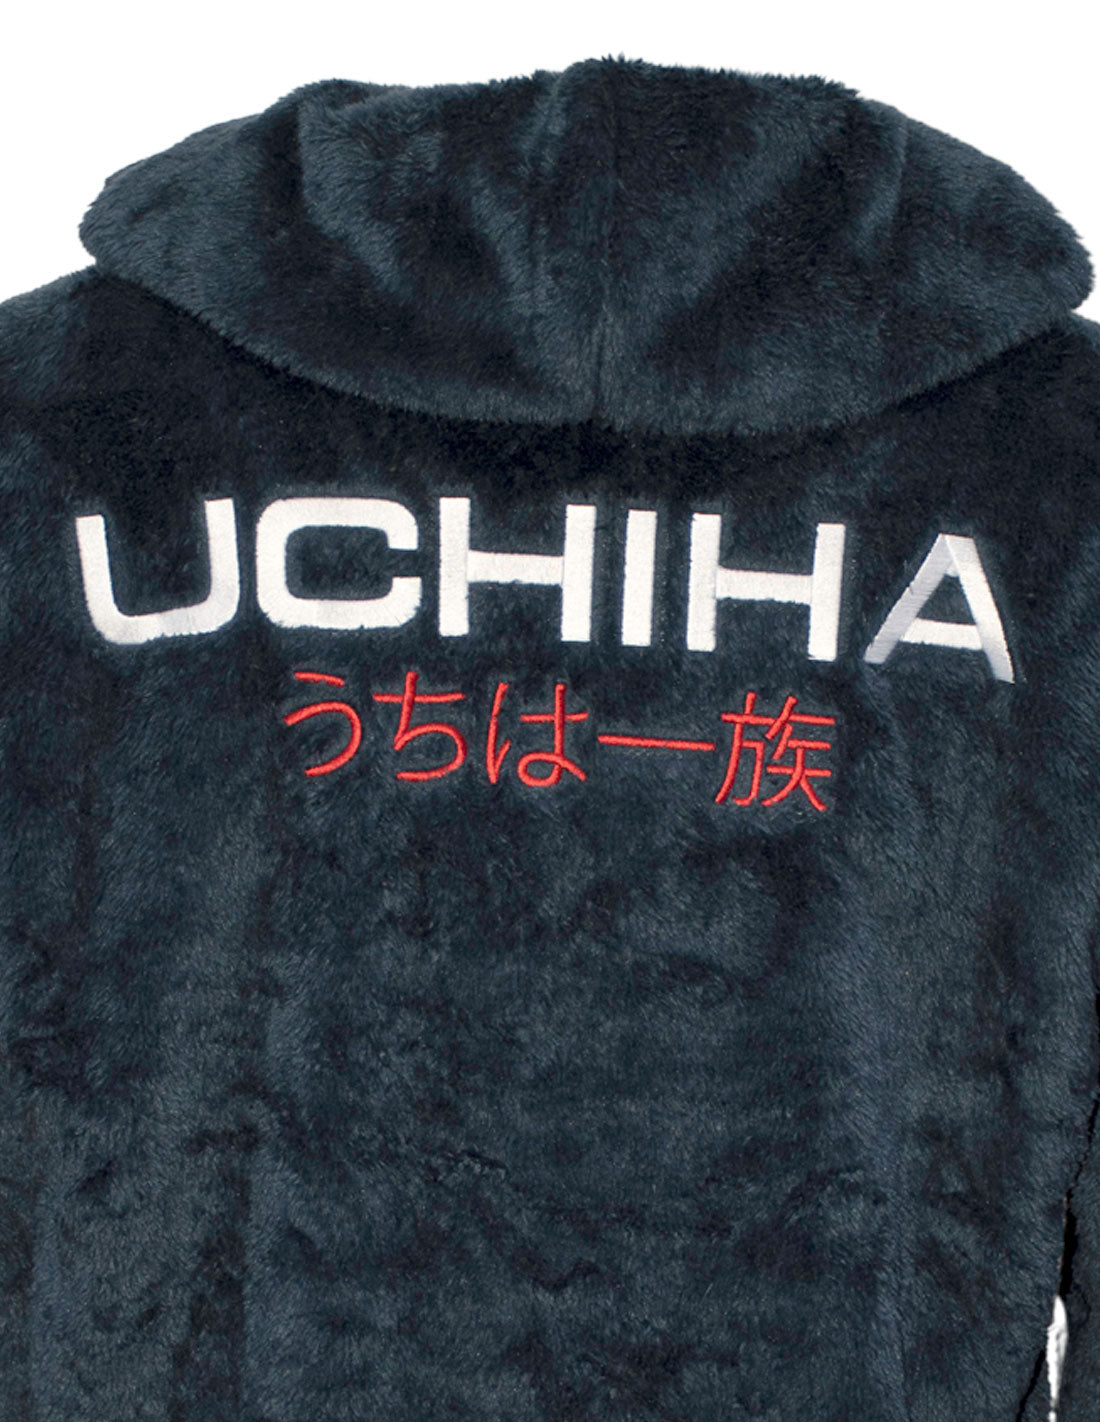 Naruto Plush Sweatshirt - Uchiha